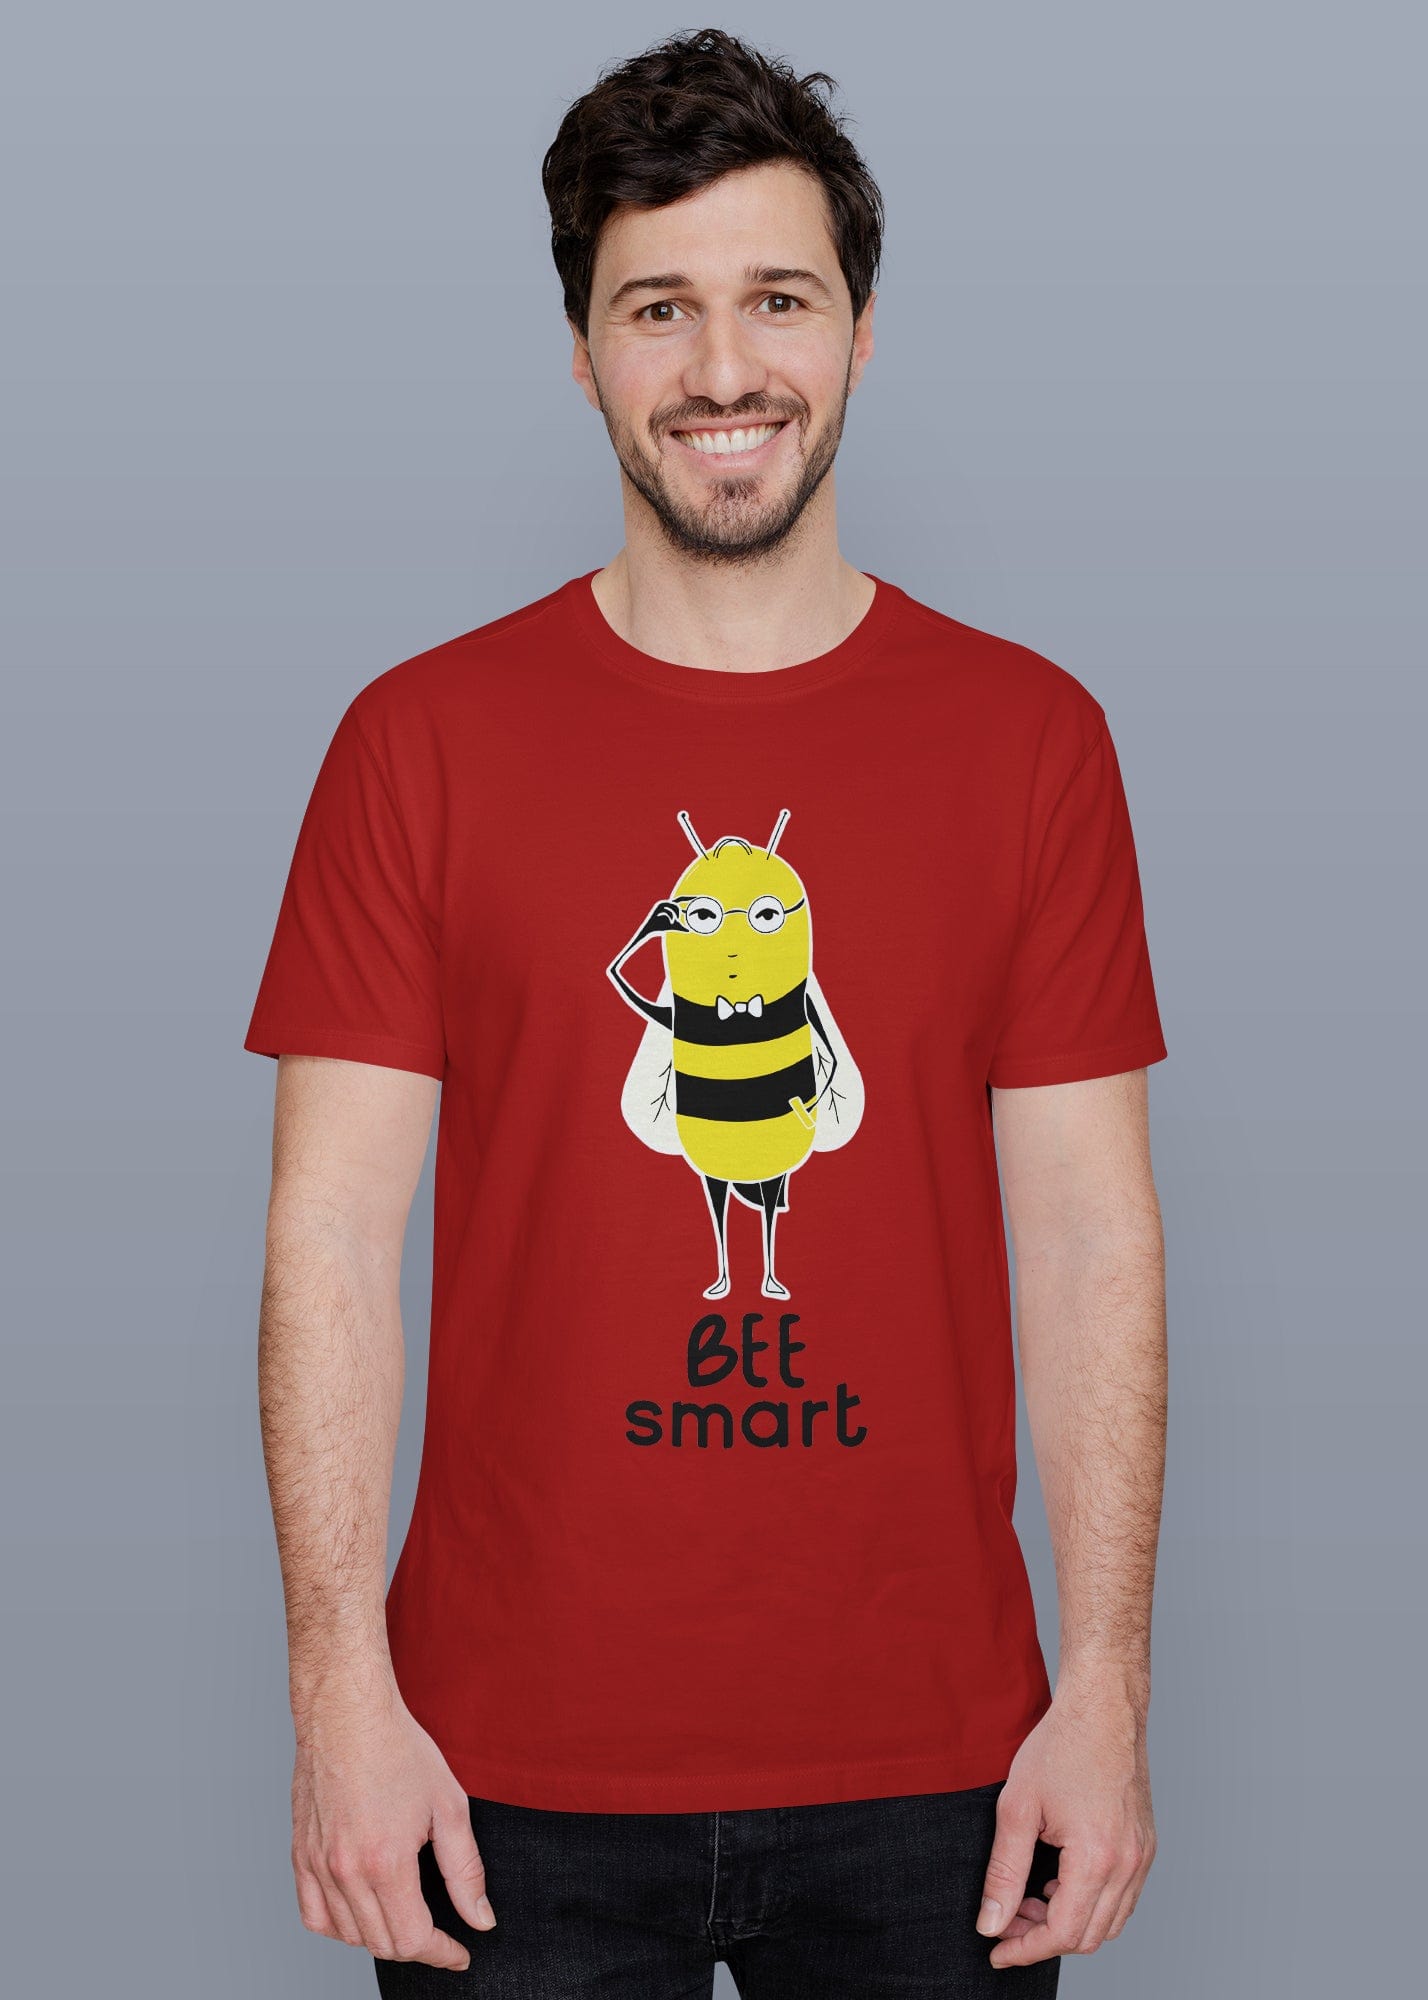 Be Smart Printed Half Sleeve Premium Cotton T-shirt For Men